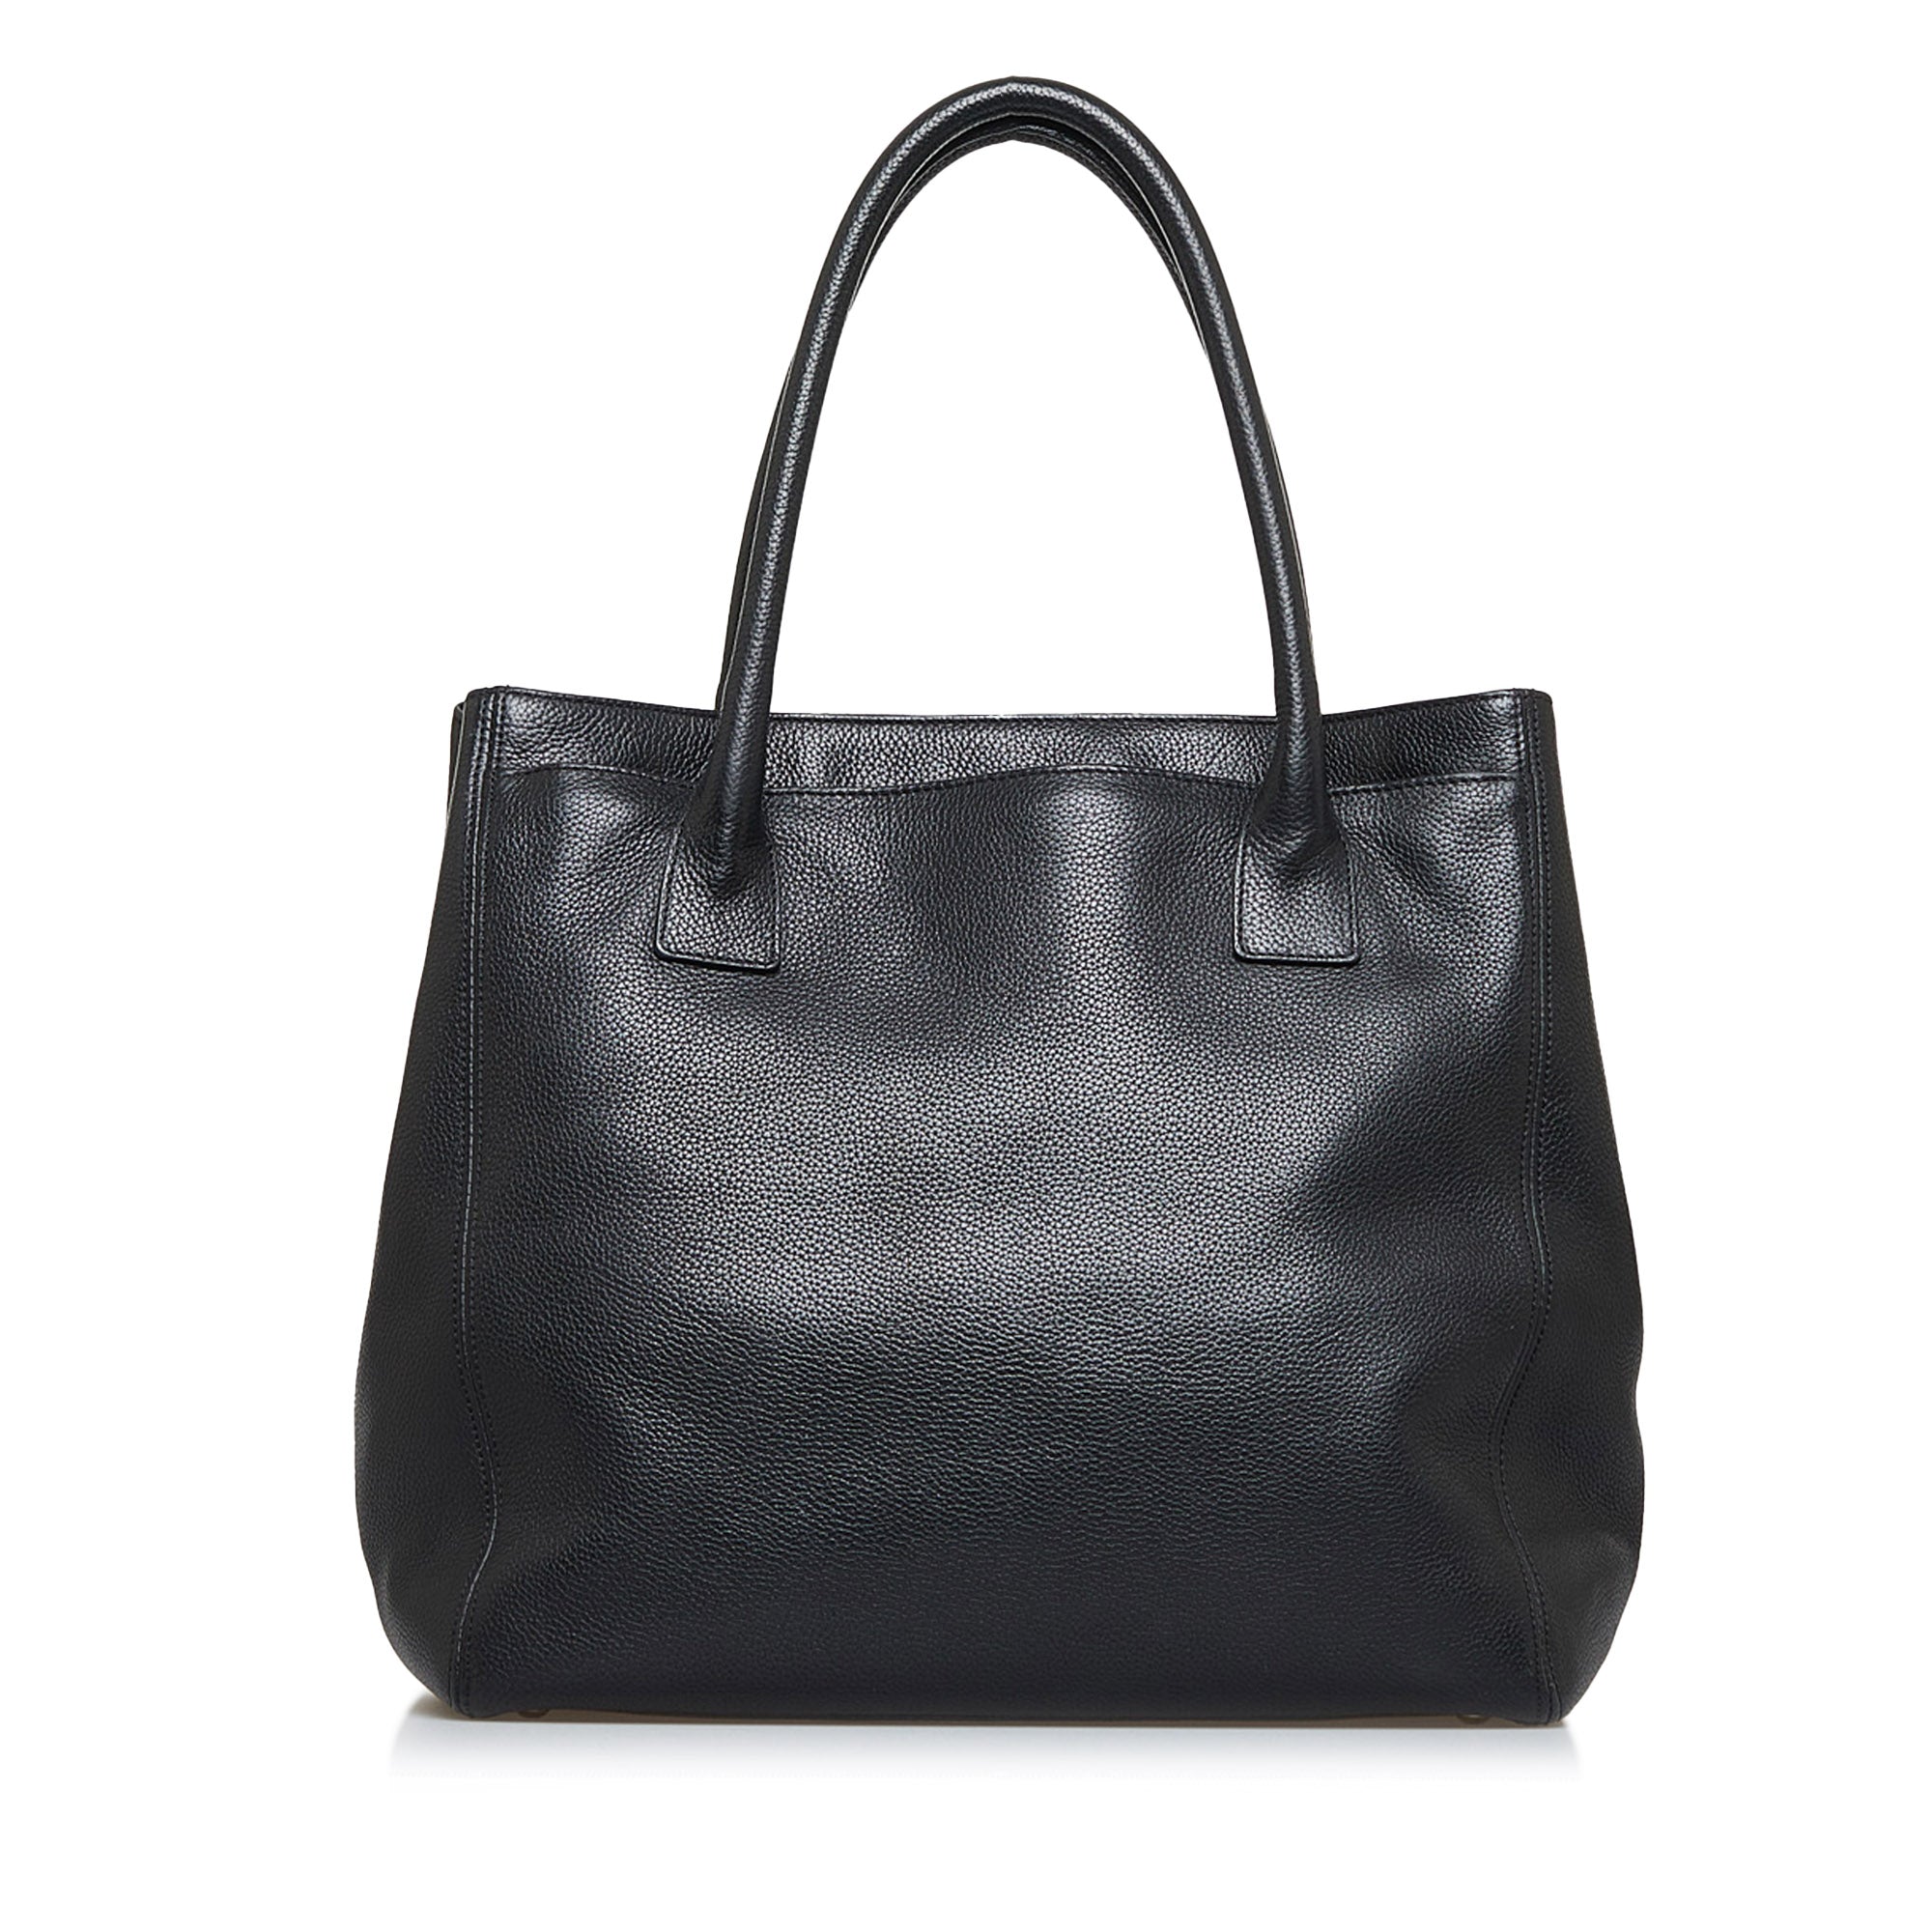 Chanel handbag 31 RUE CAMBON MONOGRAM NYLON METAL GRAY HAND BAG